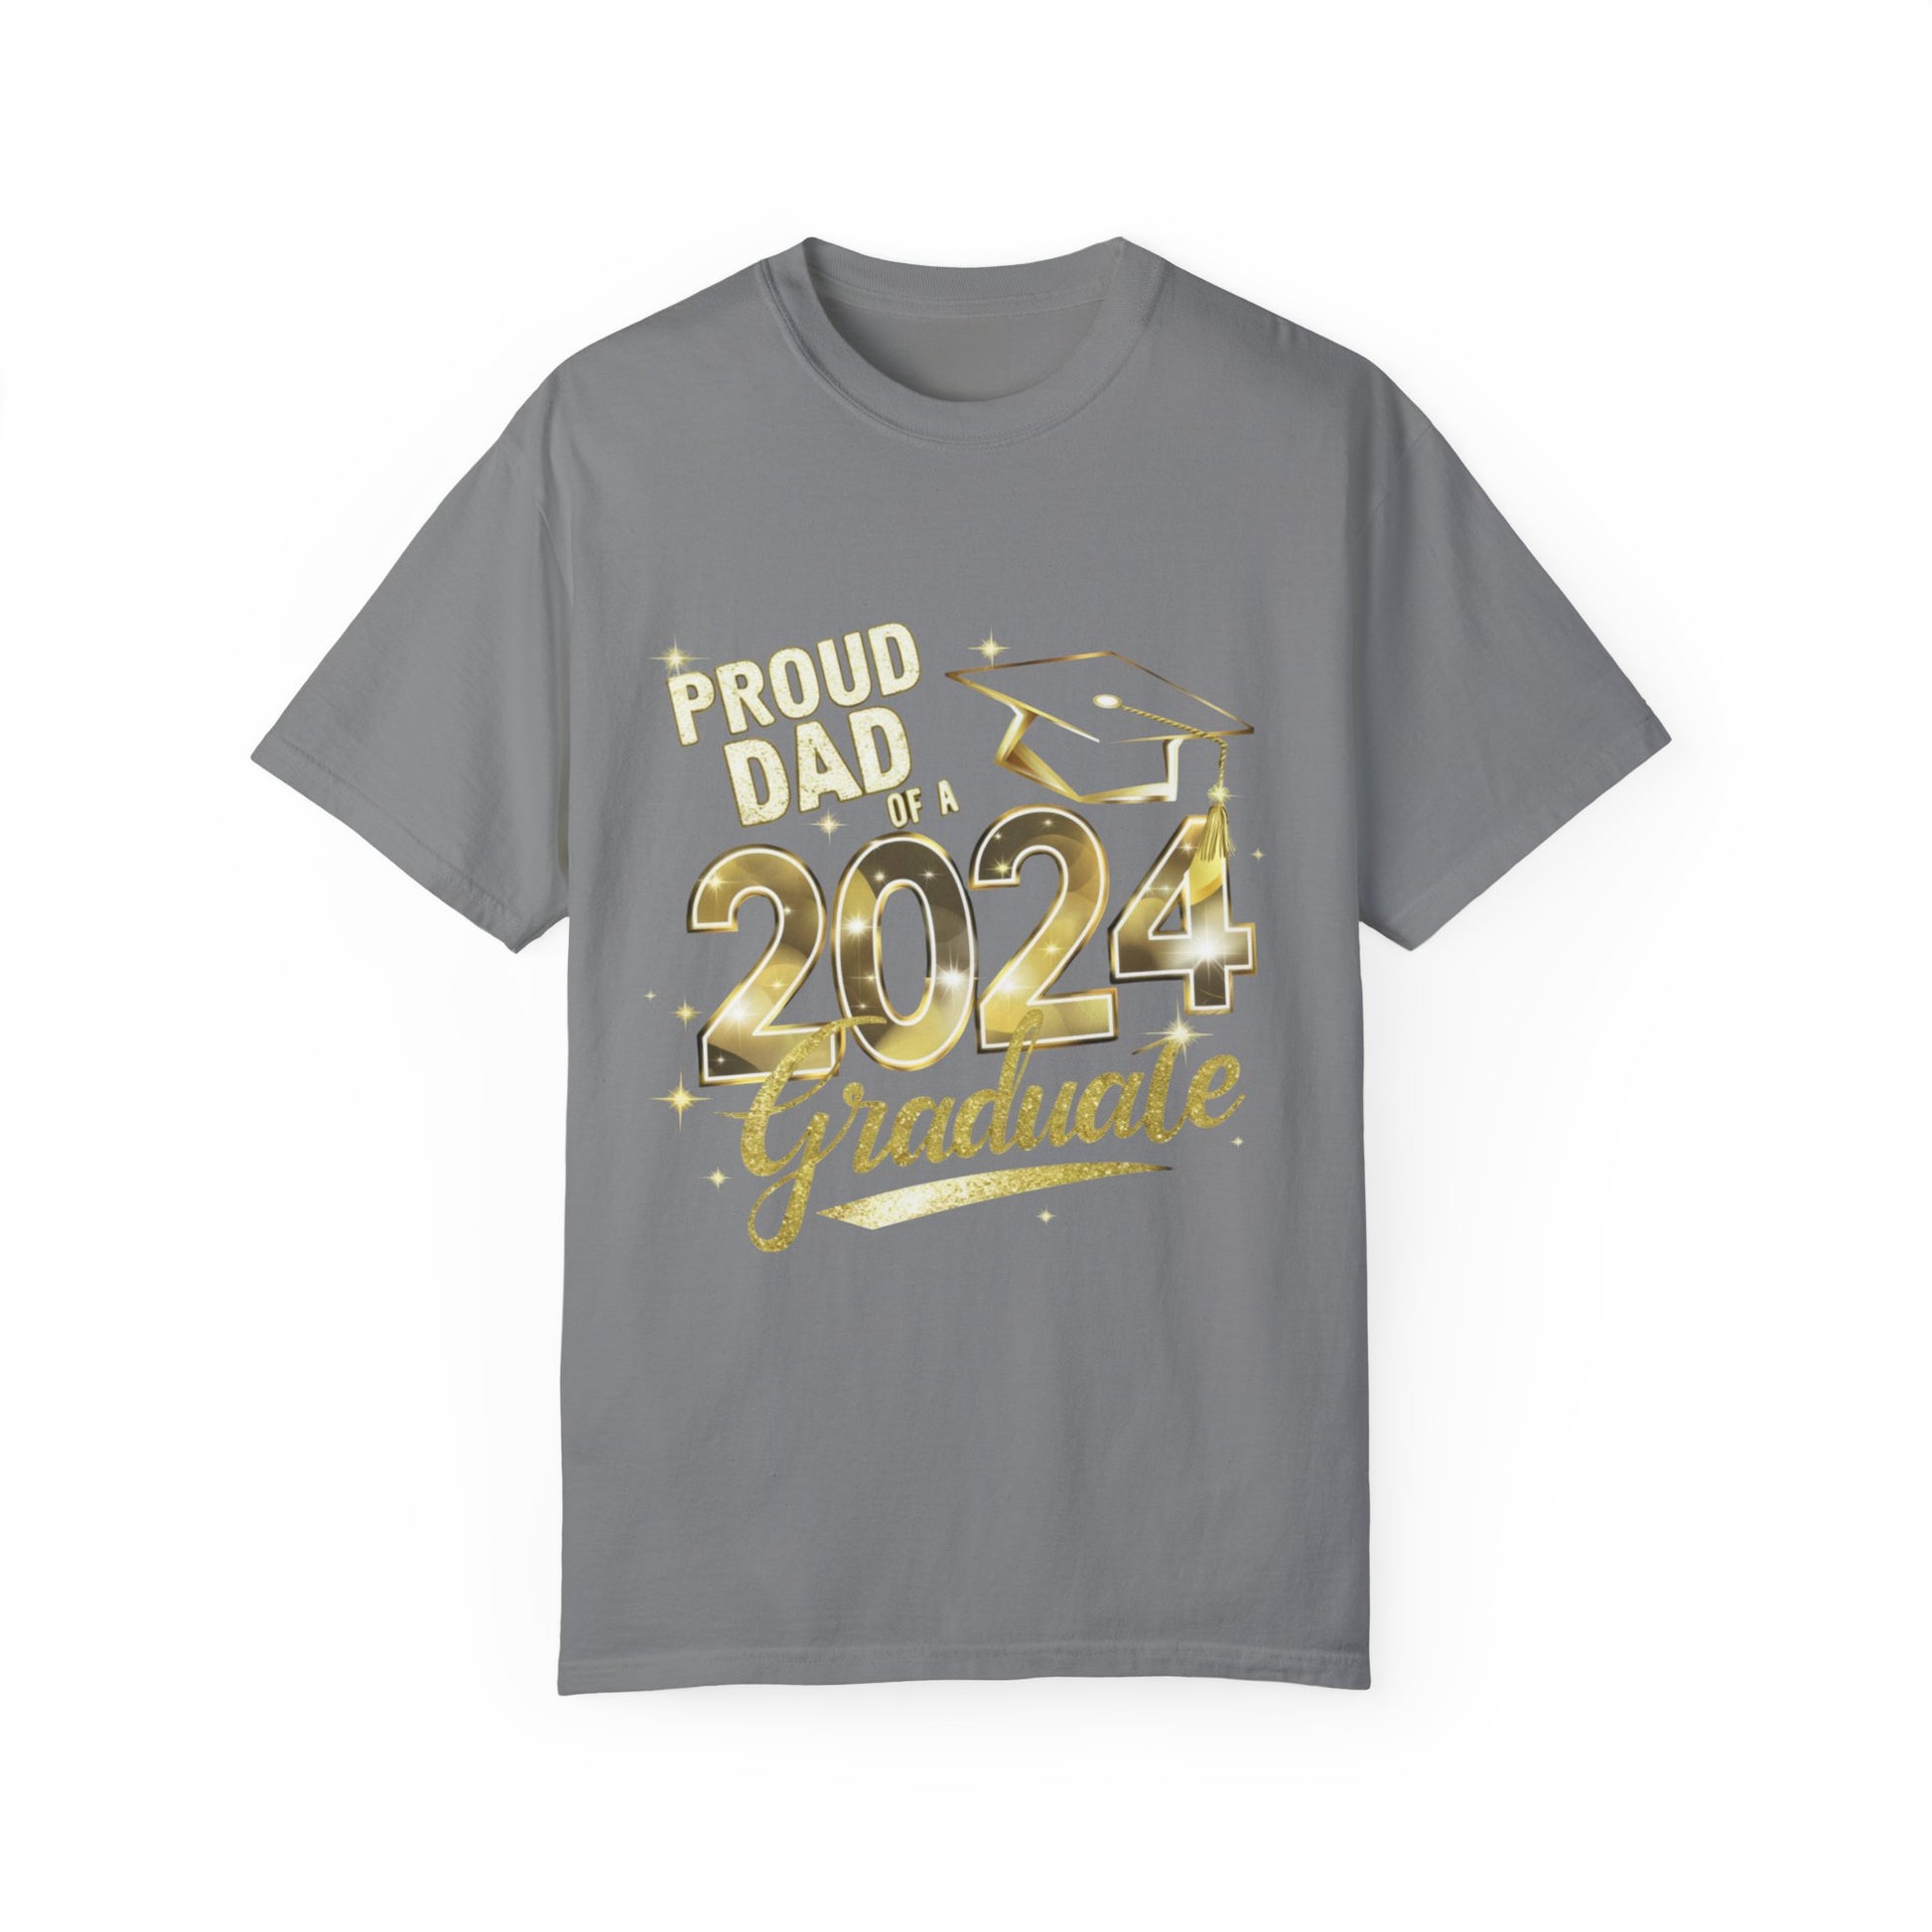 Proud of Dad 2024 Graduate Unisex Garment-dyed T-shirt Cotton Funny Humorous Graphic Soft Premium Unisex Men Women Grey T-shirt Birthday Gift-9